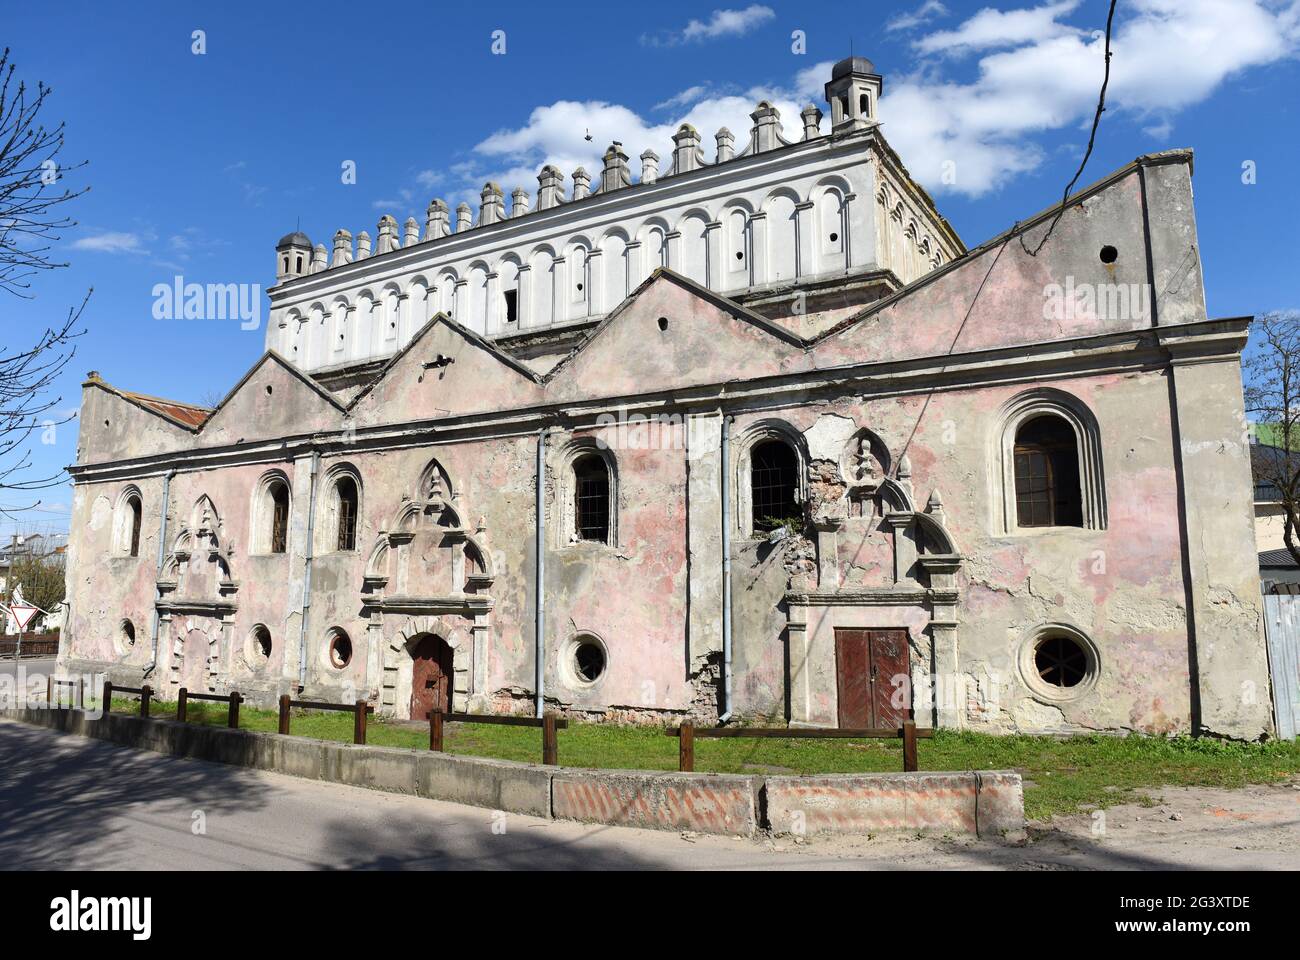 Zhovkva Synagogue in the town Zhovkva in Lviv region, Ukraine Stock Photo